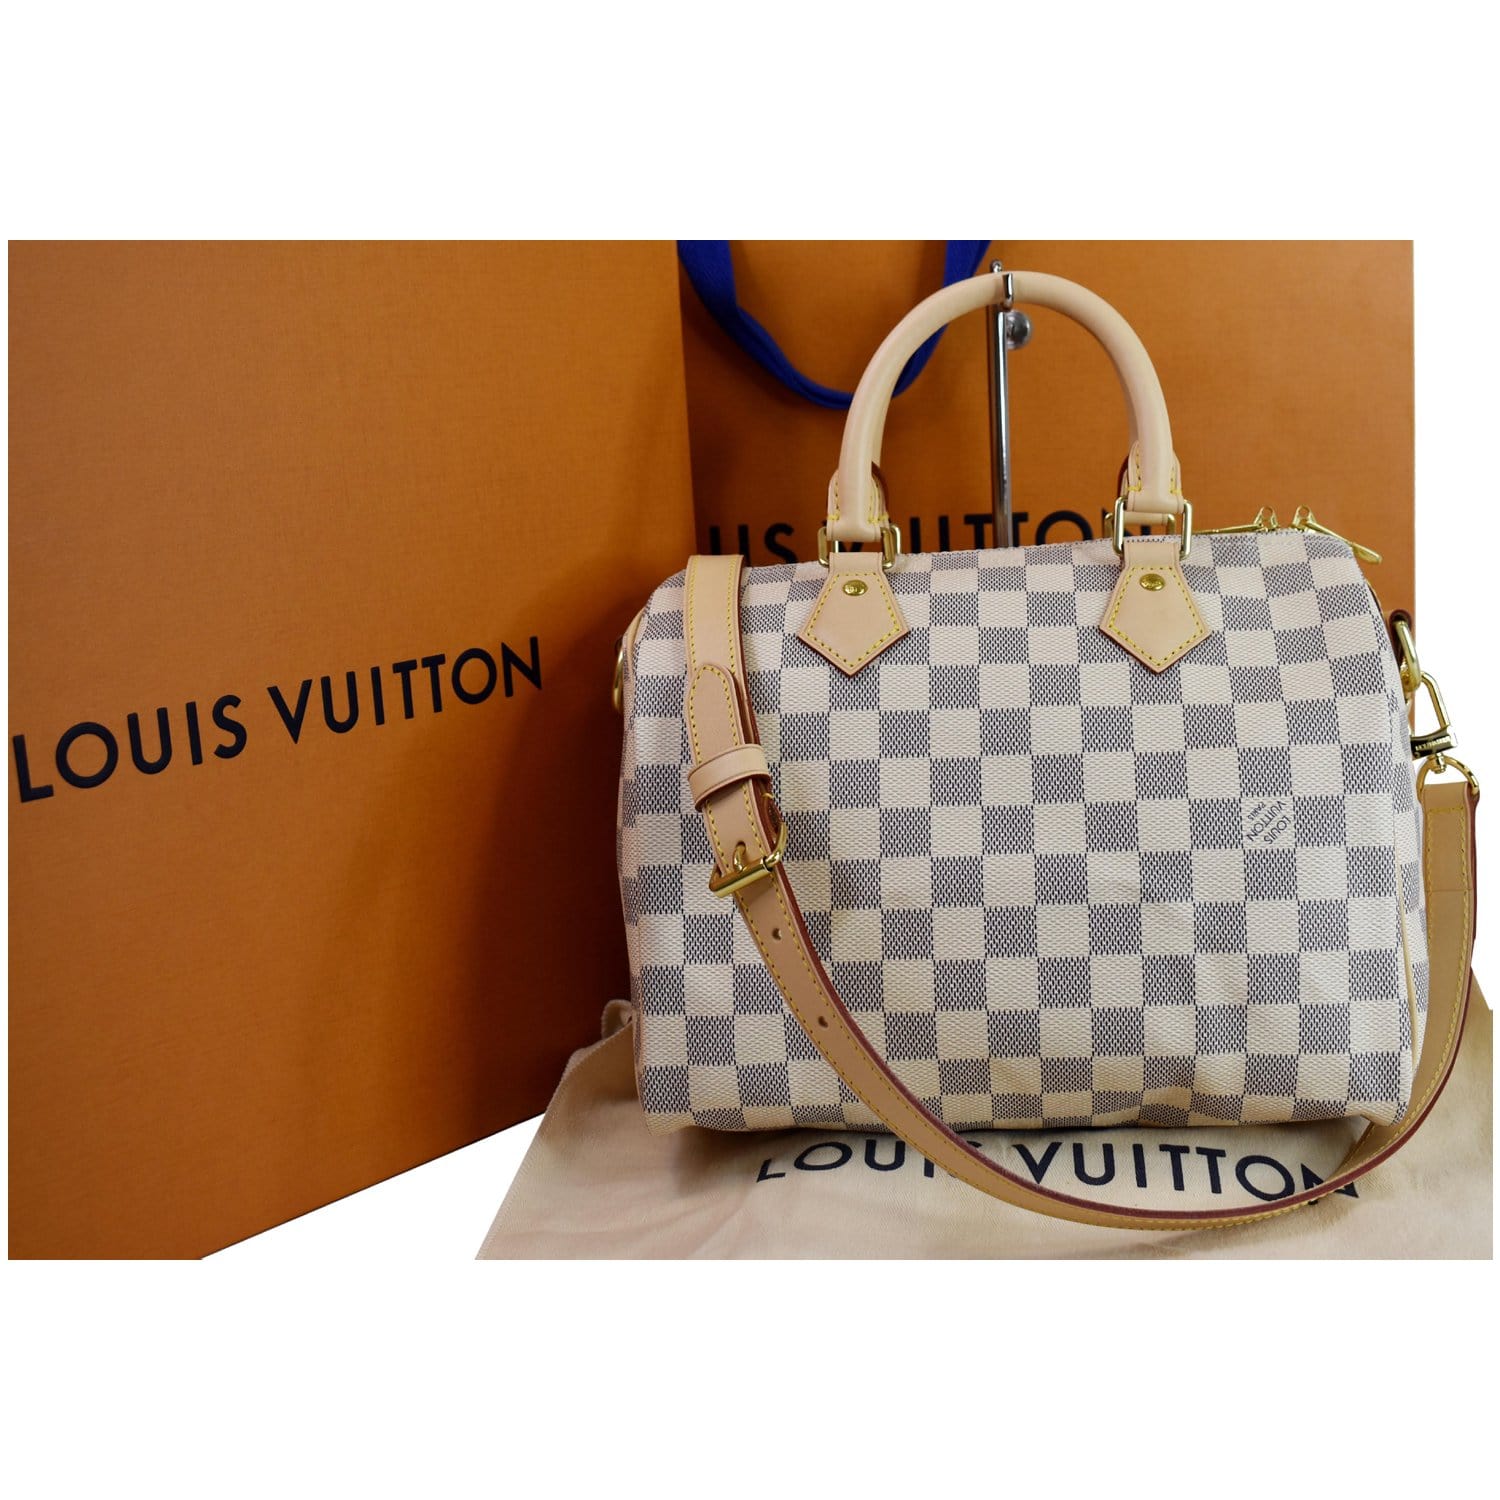 Louis Vuitton Speedy Damier Azur 25 White/Blue - US